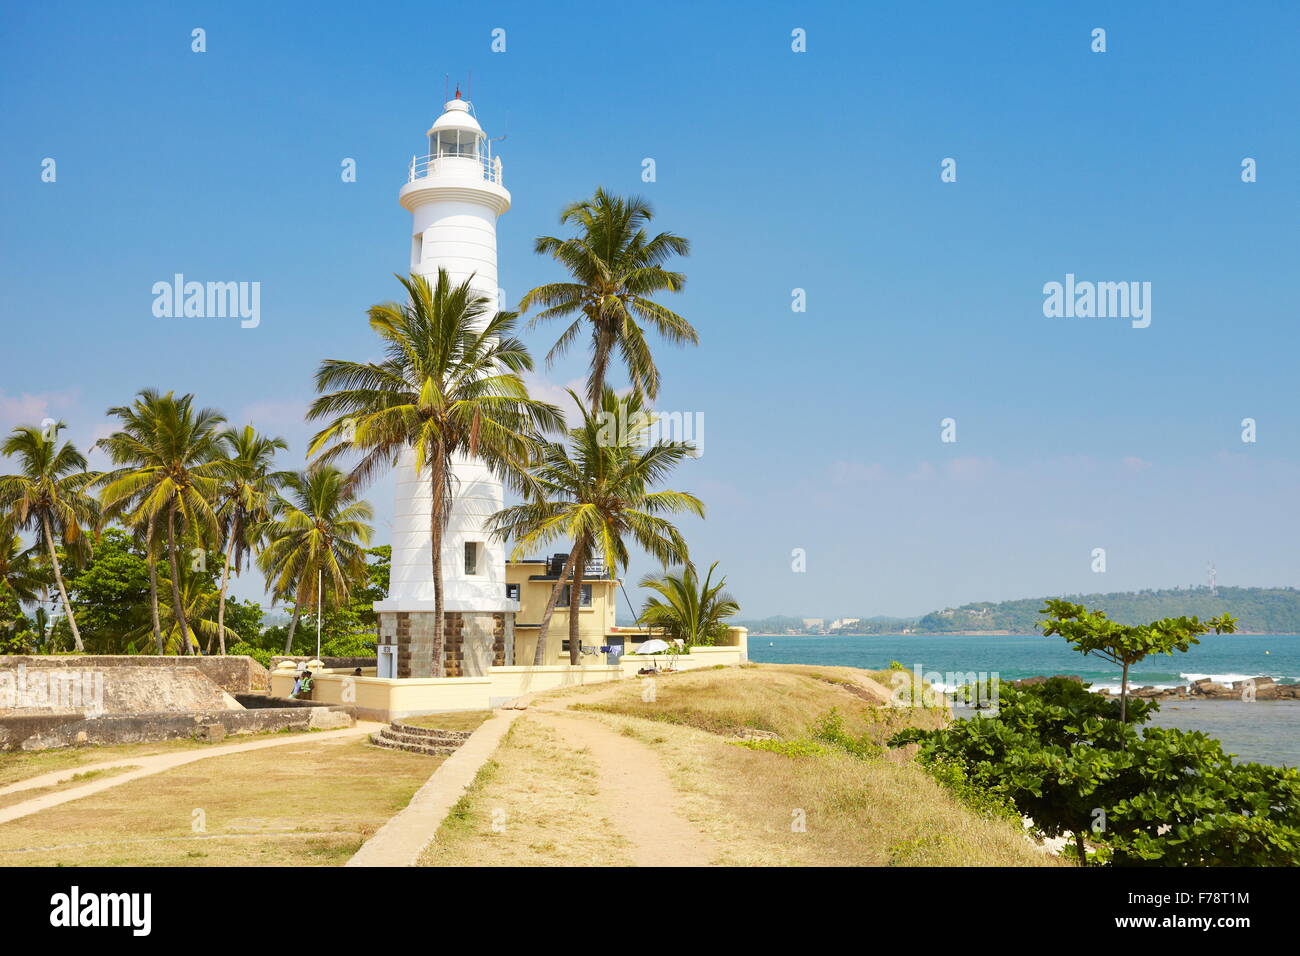 Sri Lanka - Galle, avec phare du littoral Banque D'Images